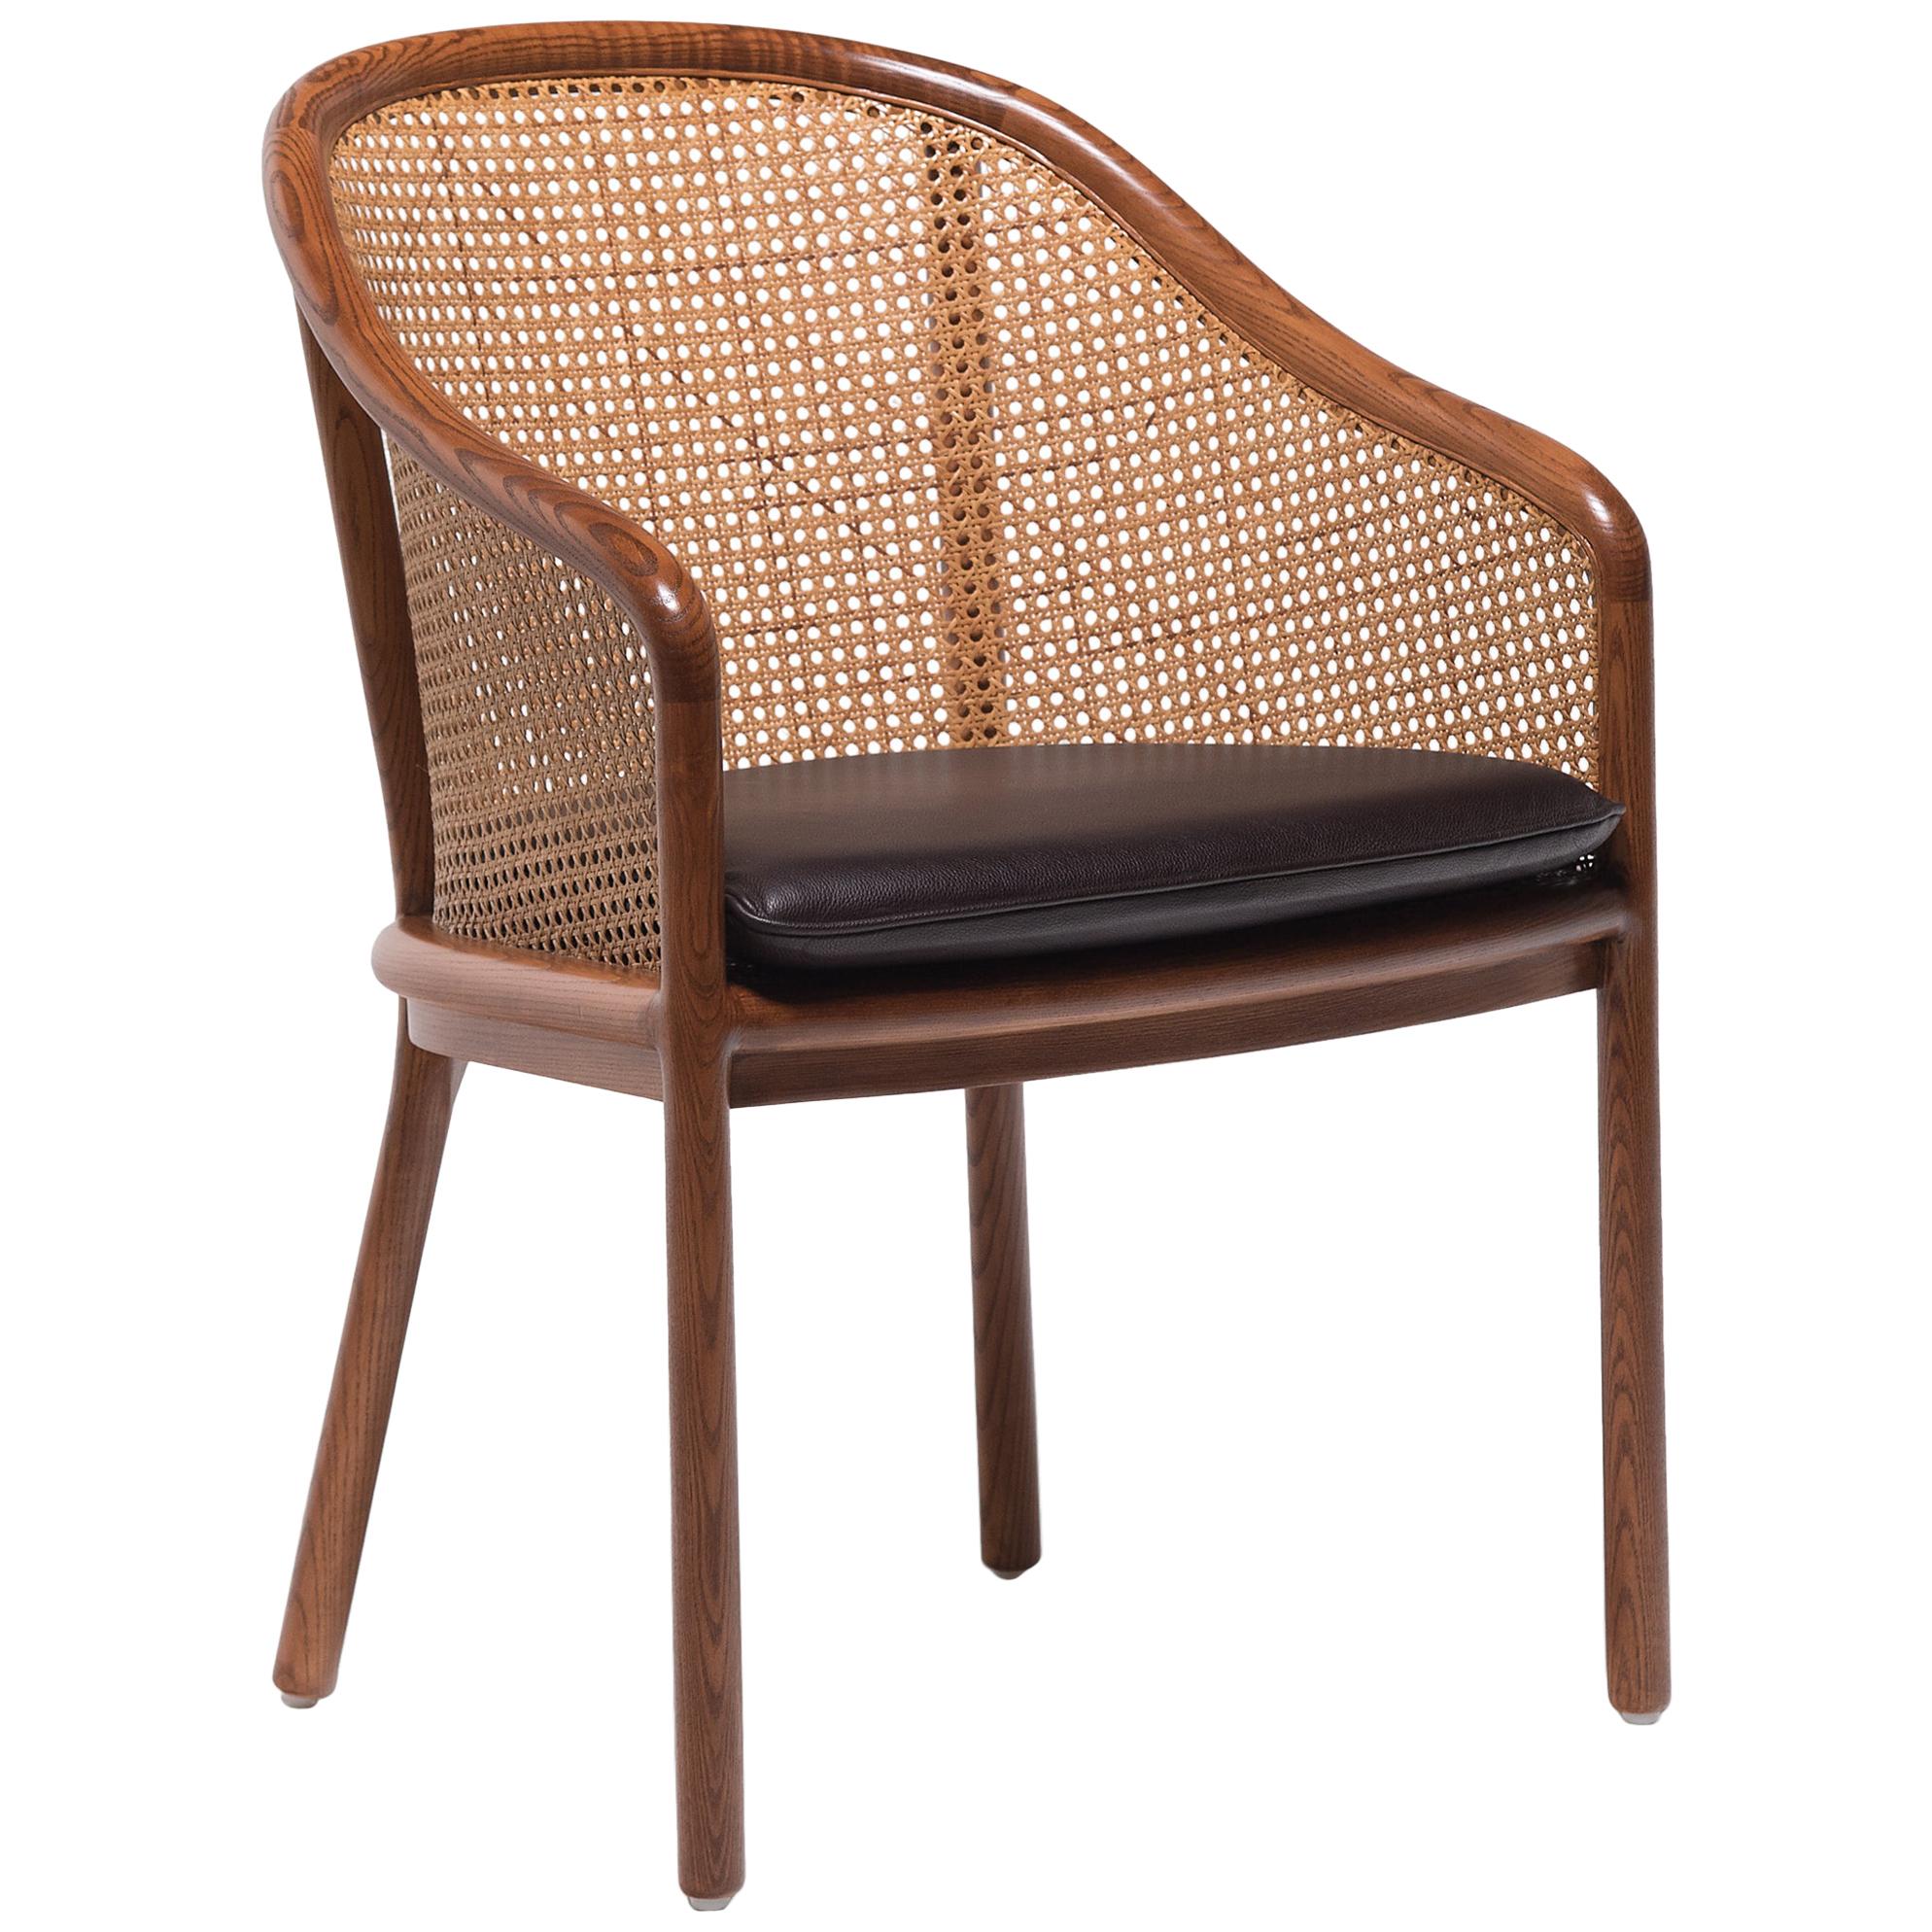 Ward Bennett Cane Landmark Lounge Chair